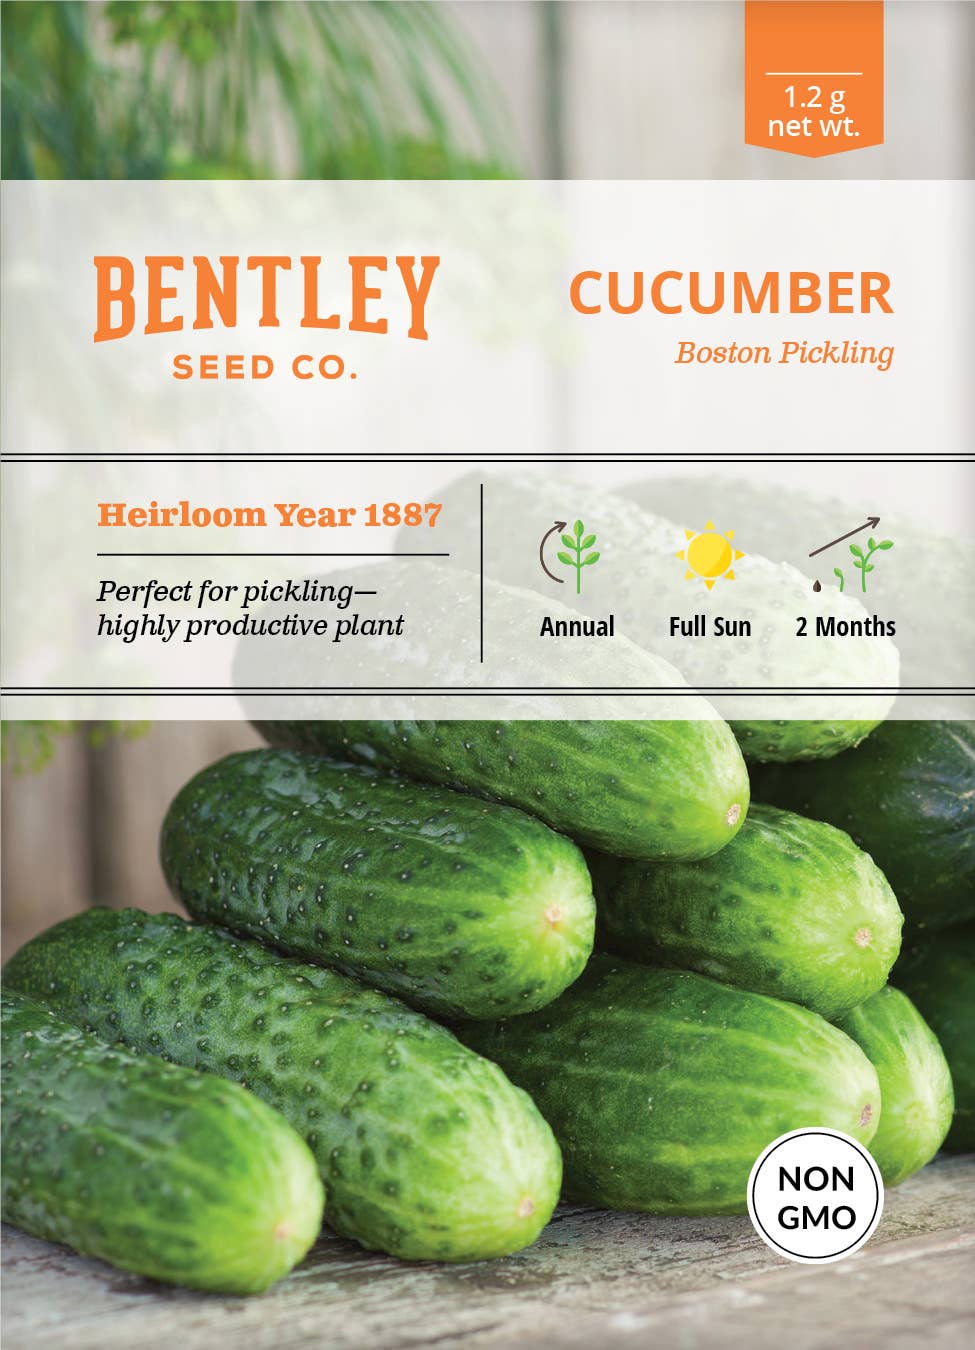 Bentley Seed Co. - Cucumber Boston Pickling